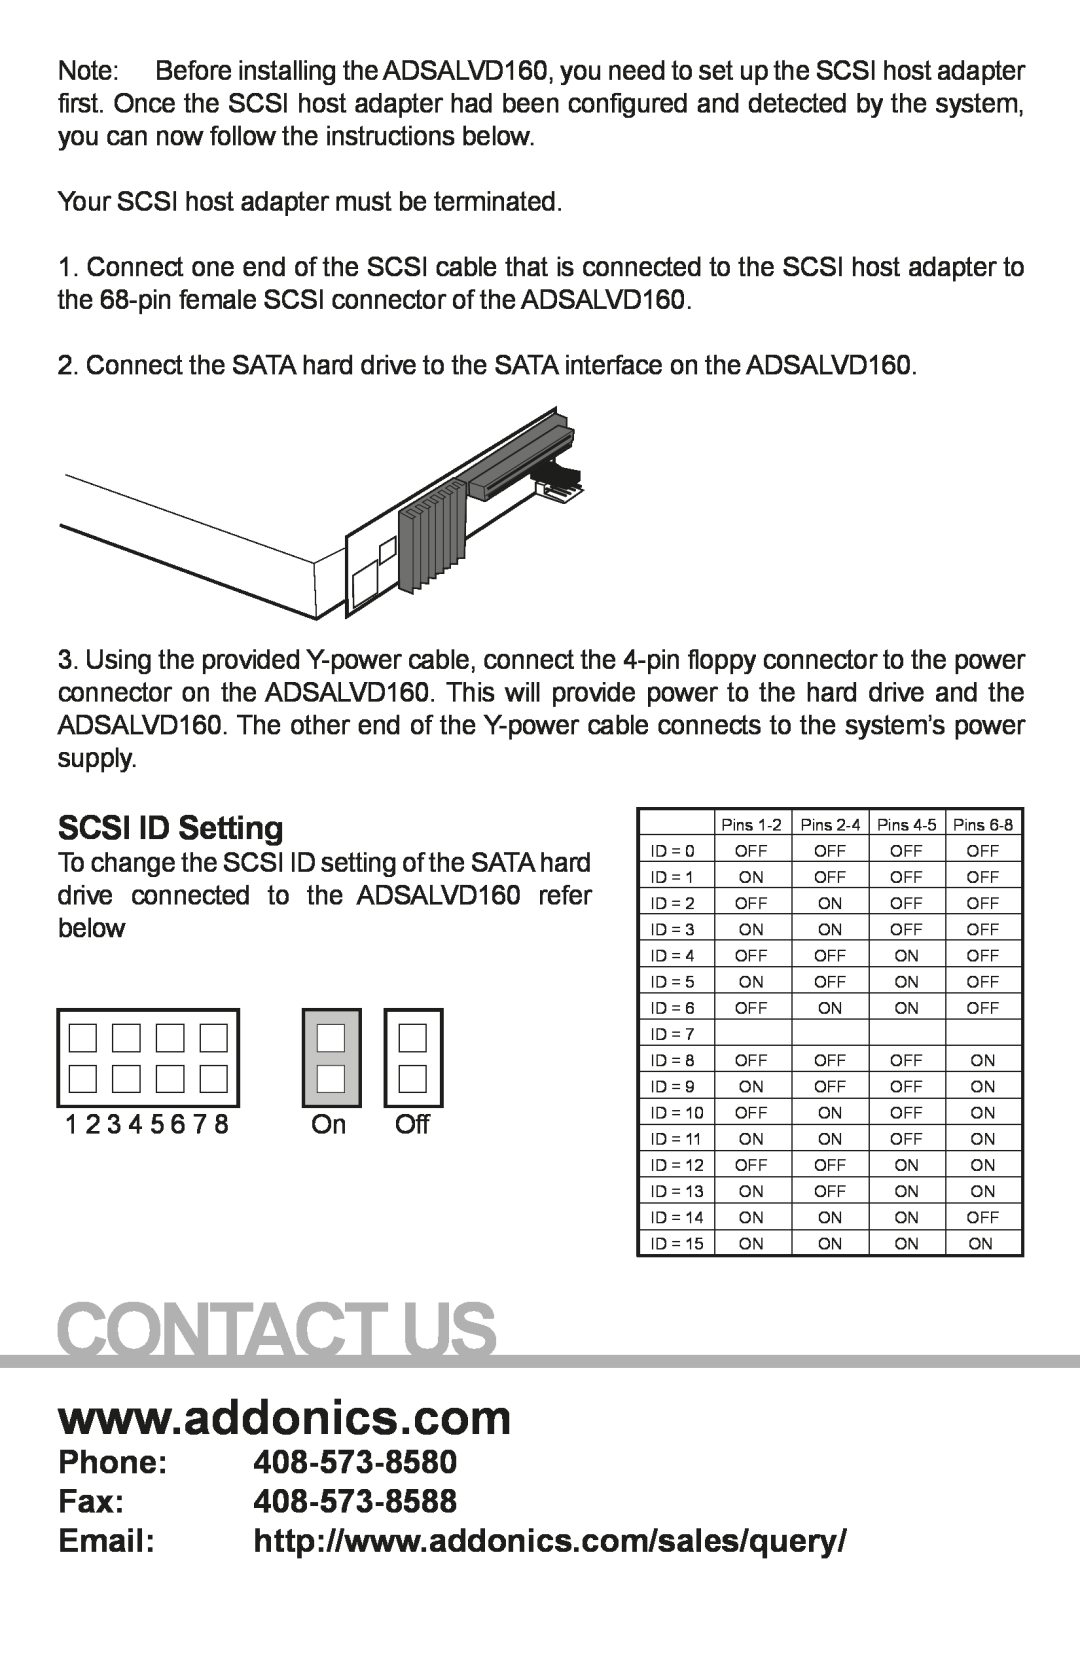 Addonics Technologies ADSALVD160 manual Contact Us, SCSI ID Setting, Phone Fax 